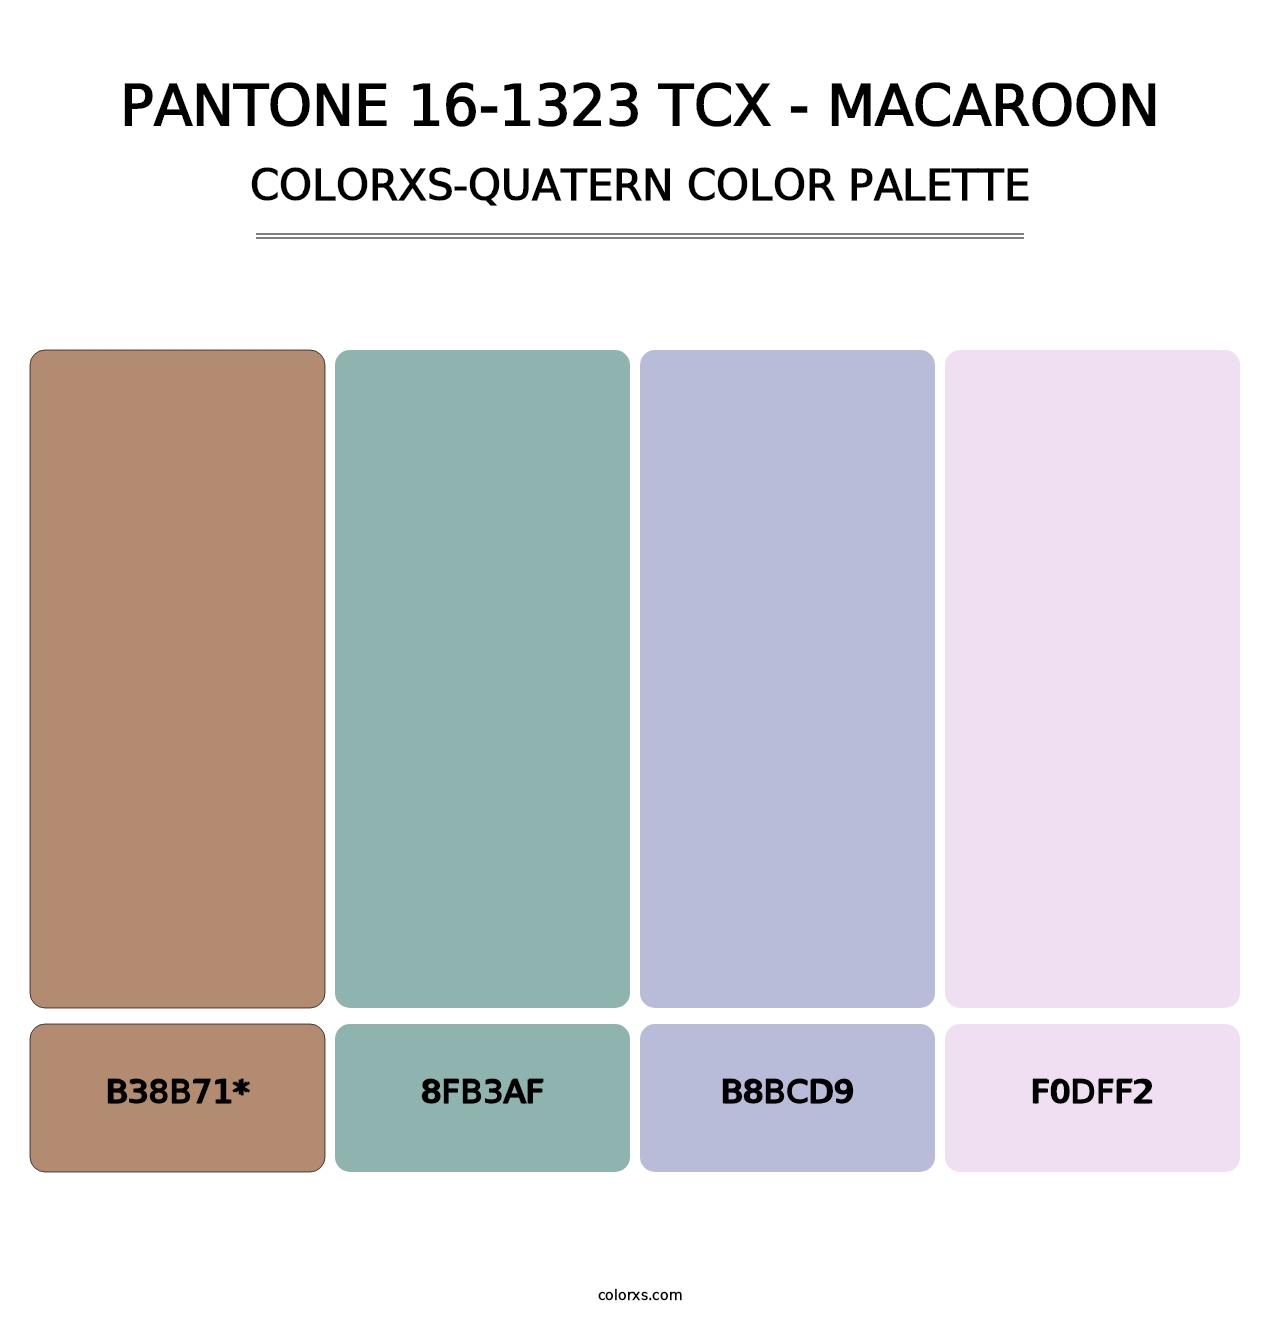 PANTONE 16-1323 TCX - Macaroon - Colorxs Quatern Palette